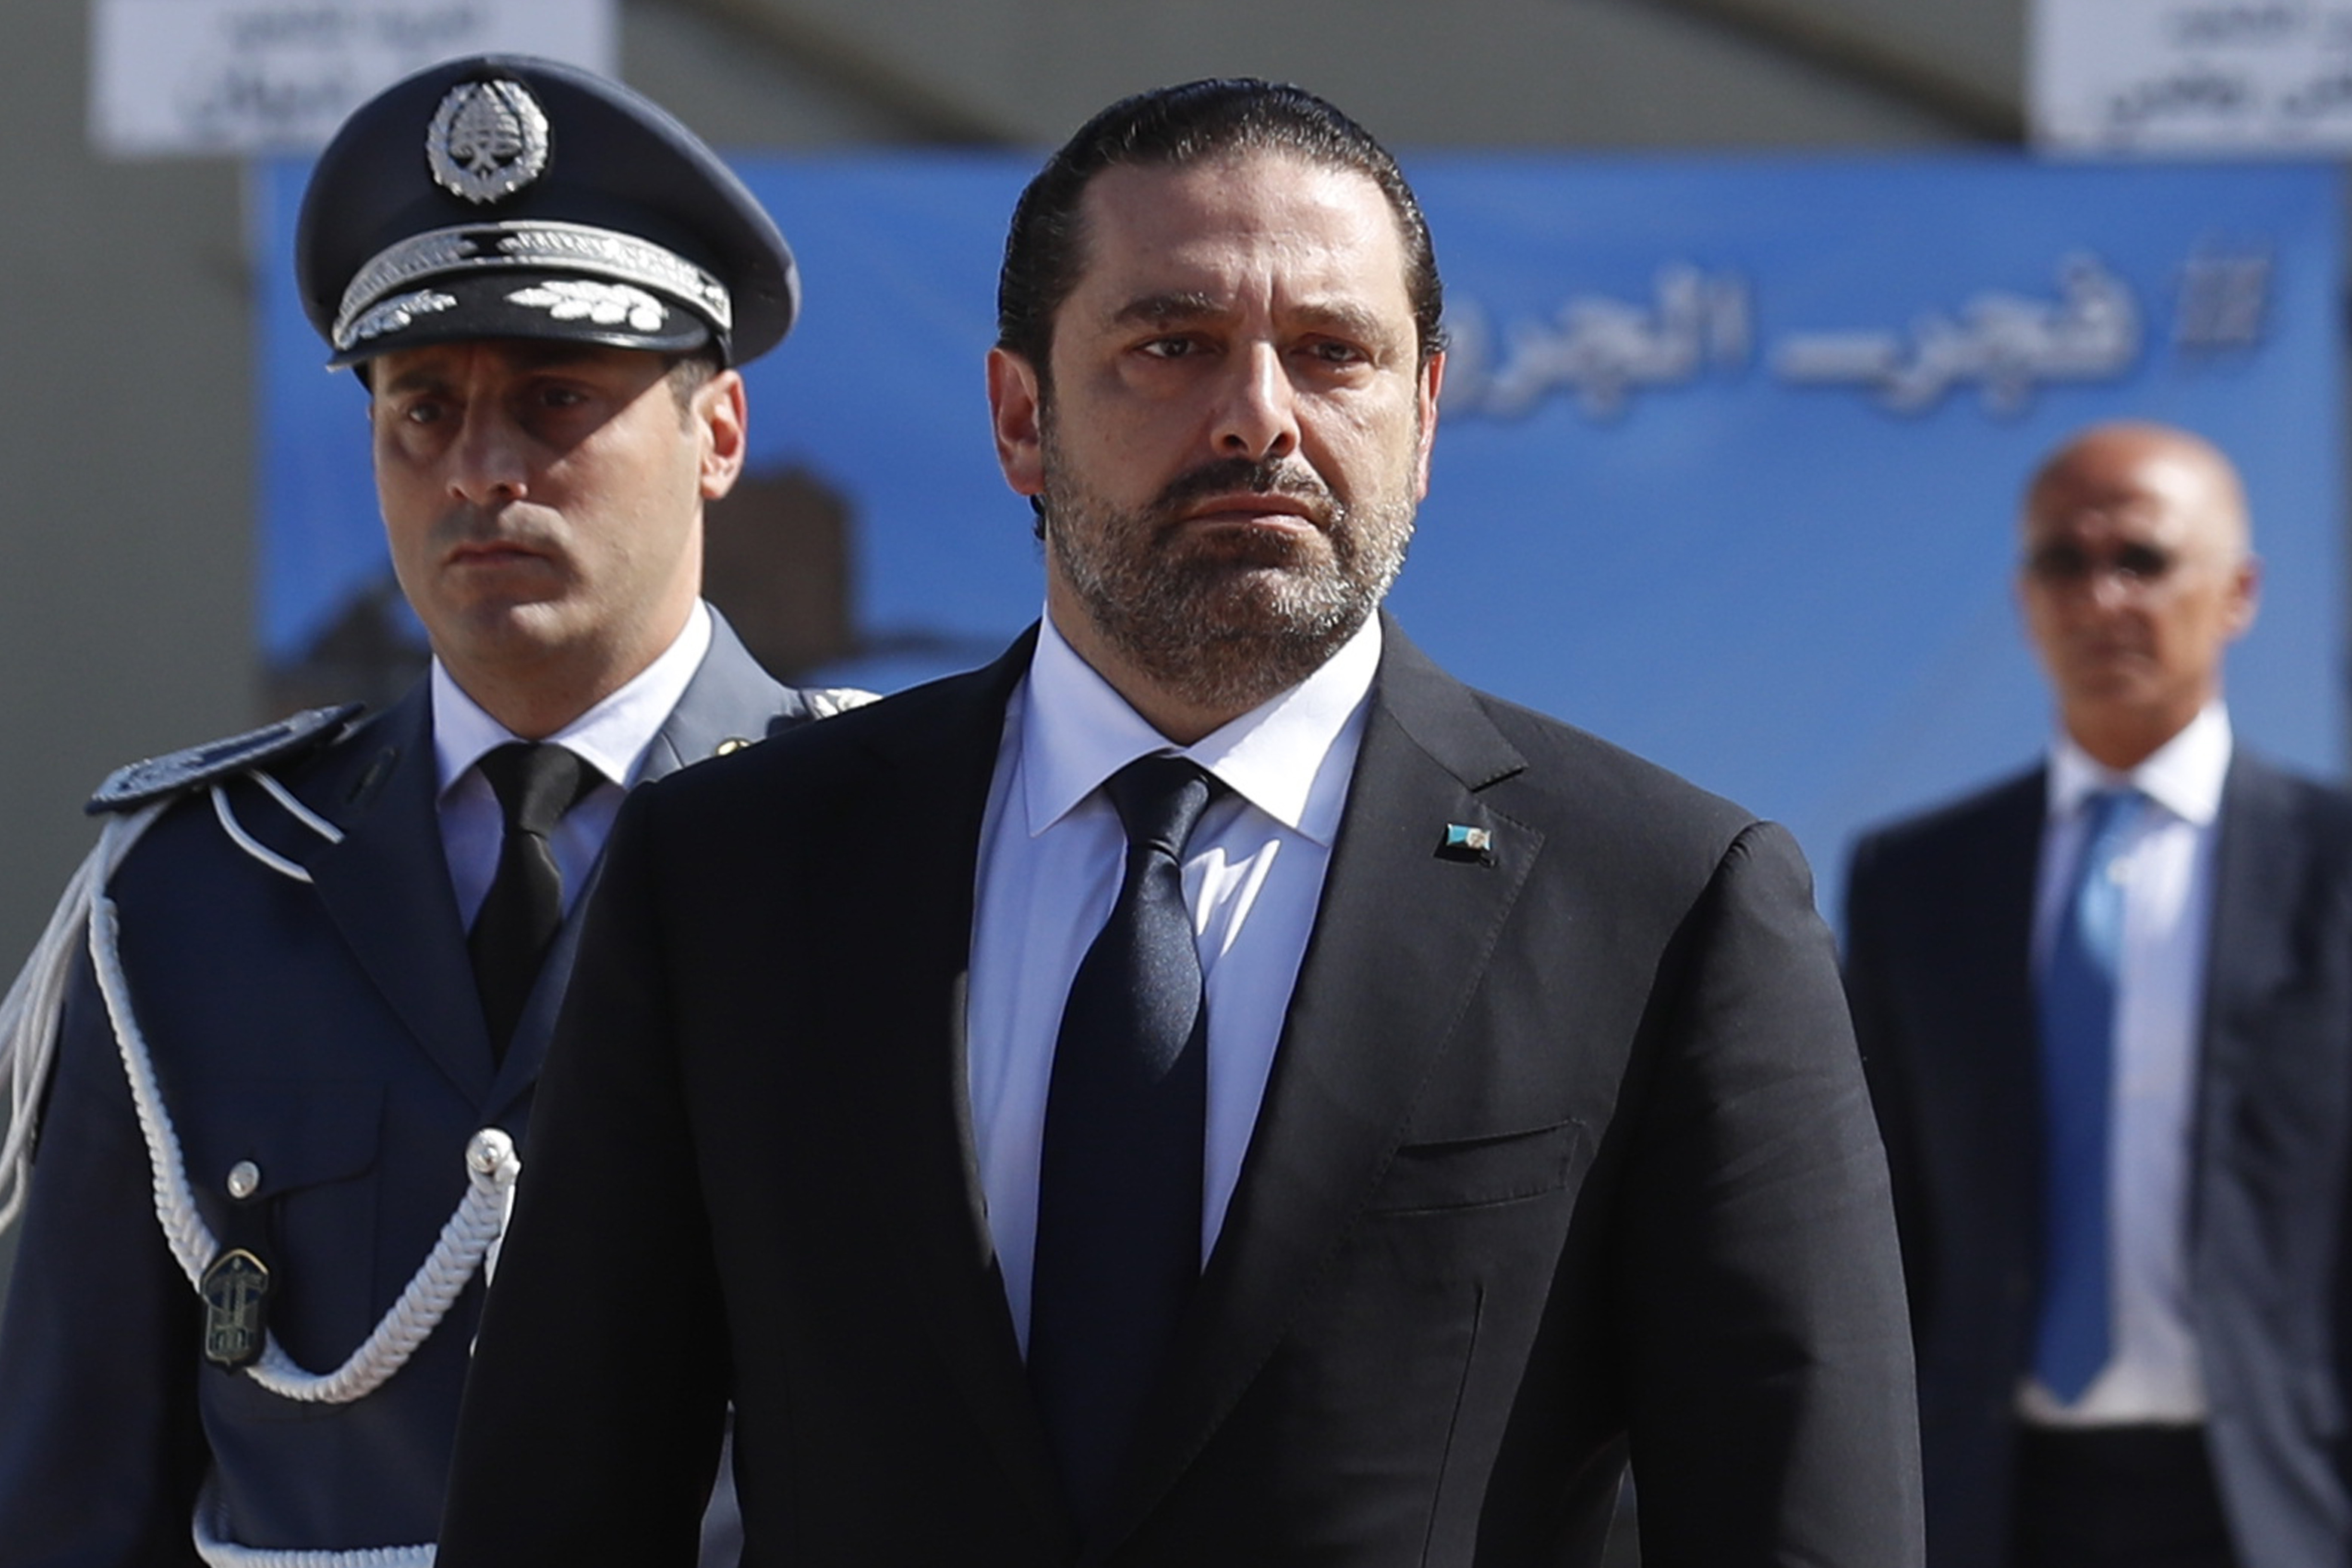 Lebanon accuses Saudi Arabia of holding its PM hostage